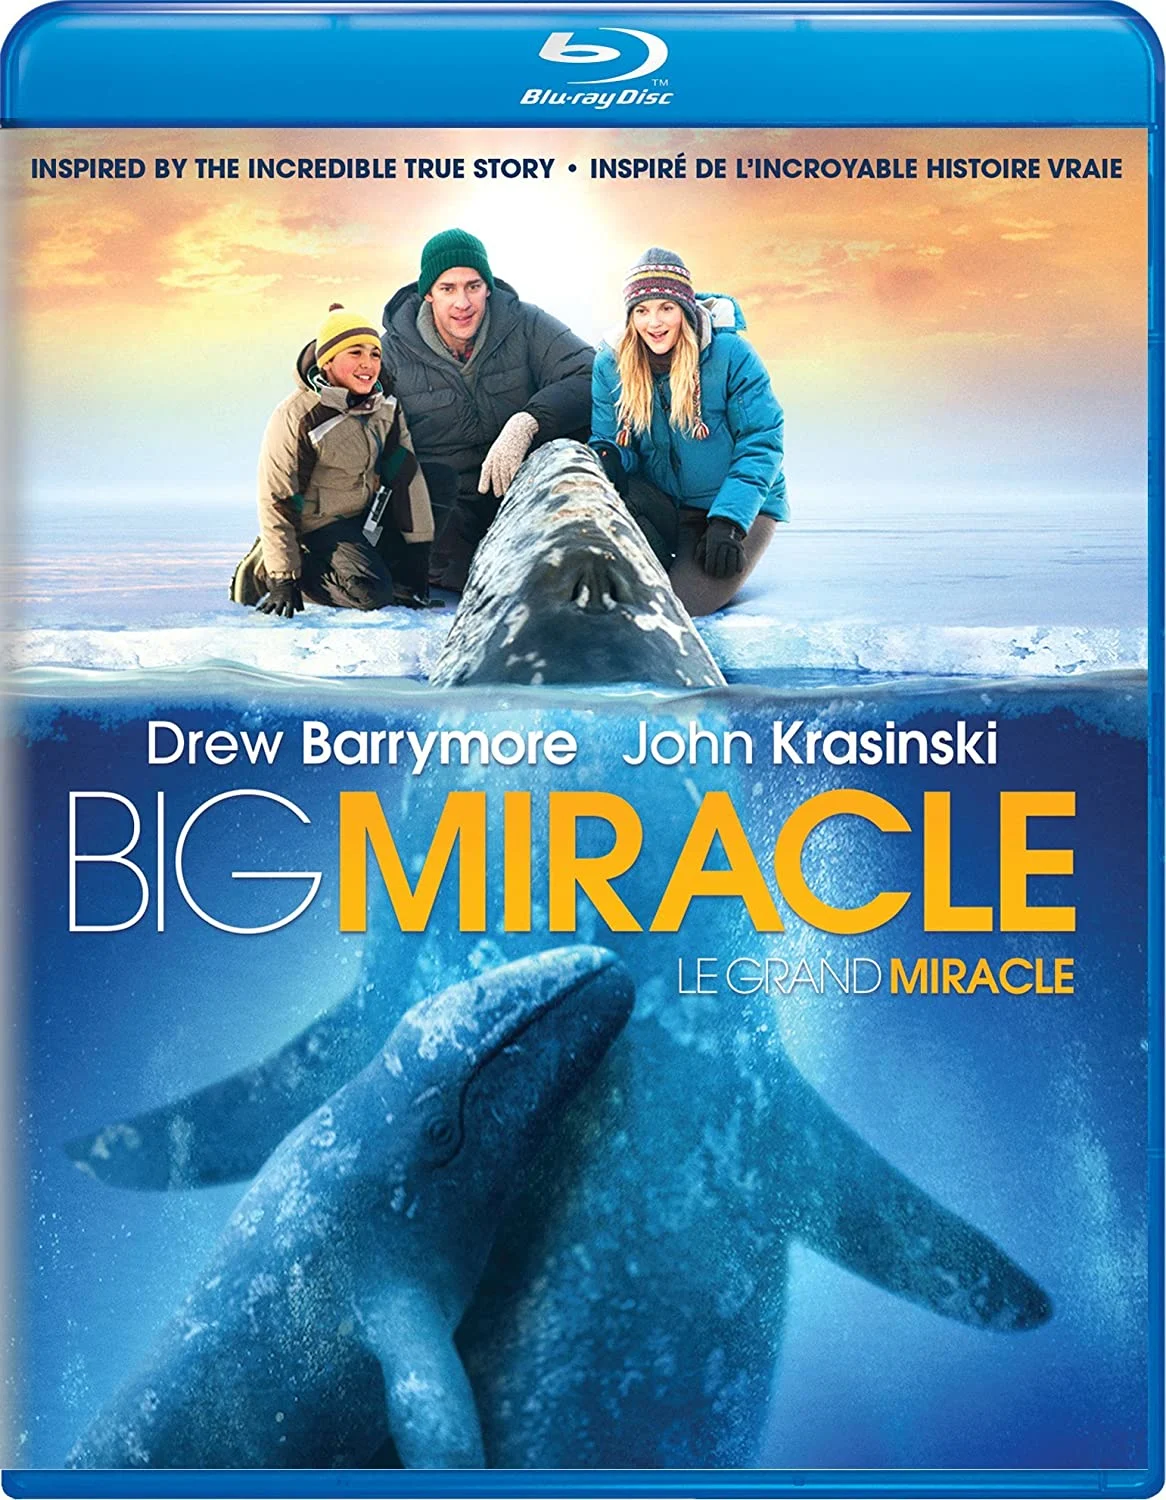 Big Miracle (Blu-ray) on MovieShack